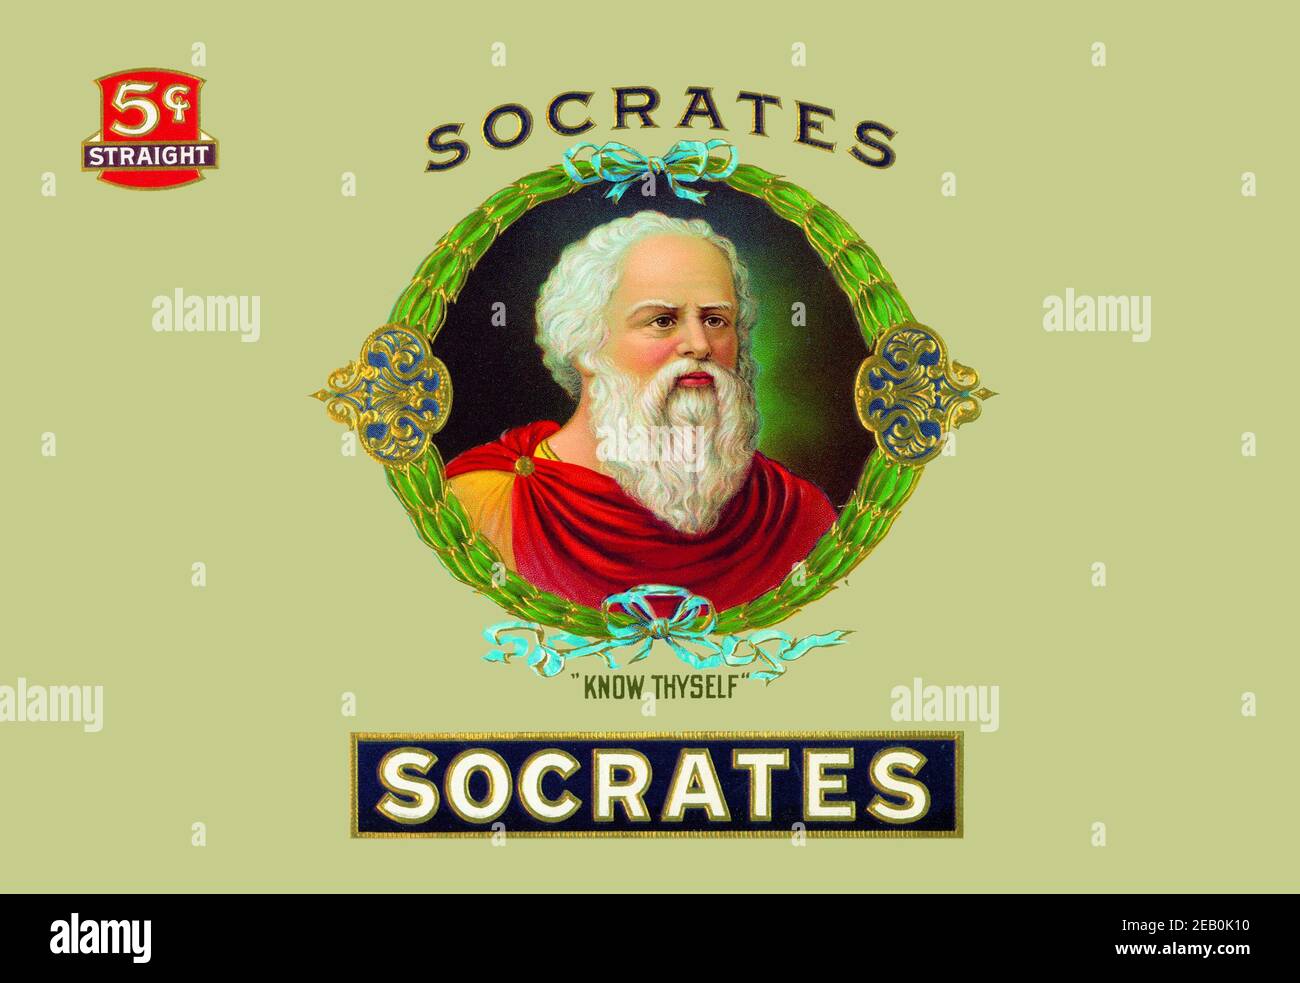 Socrates Cigars - 'Know Thyself' Stock Photo